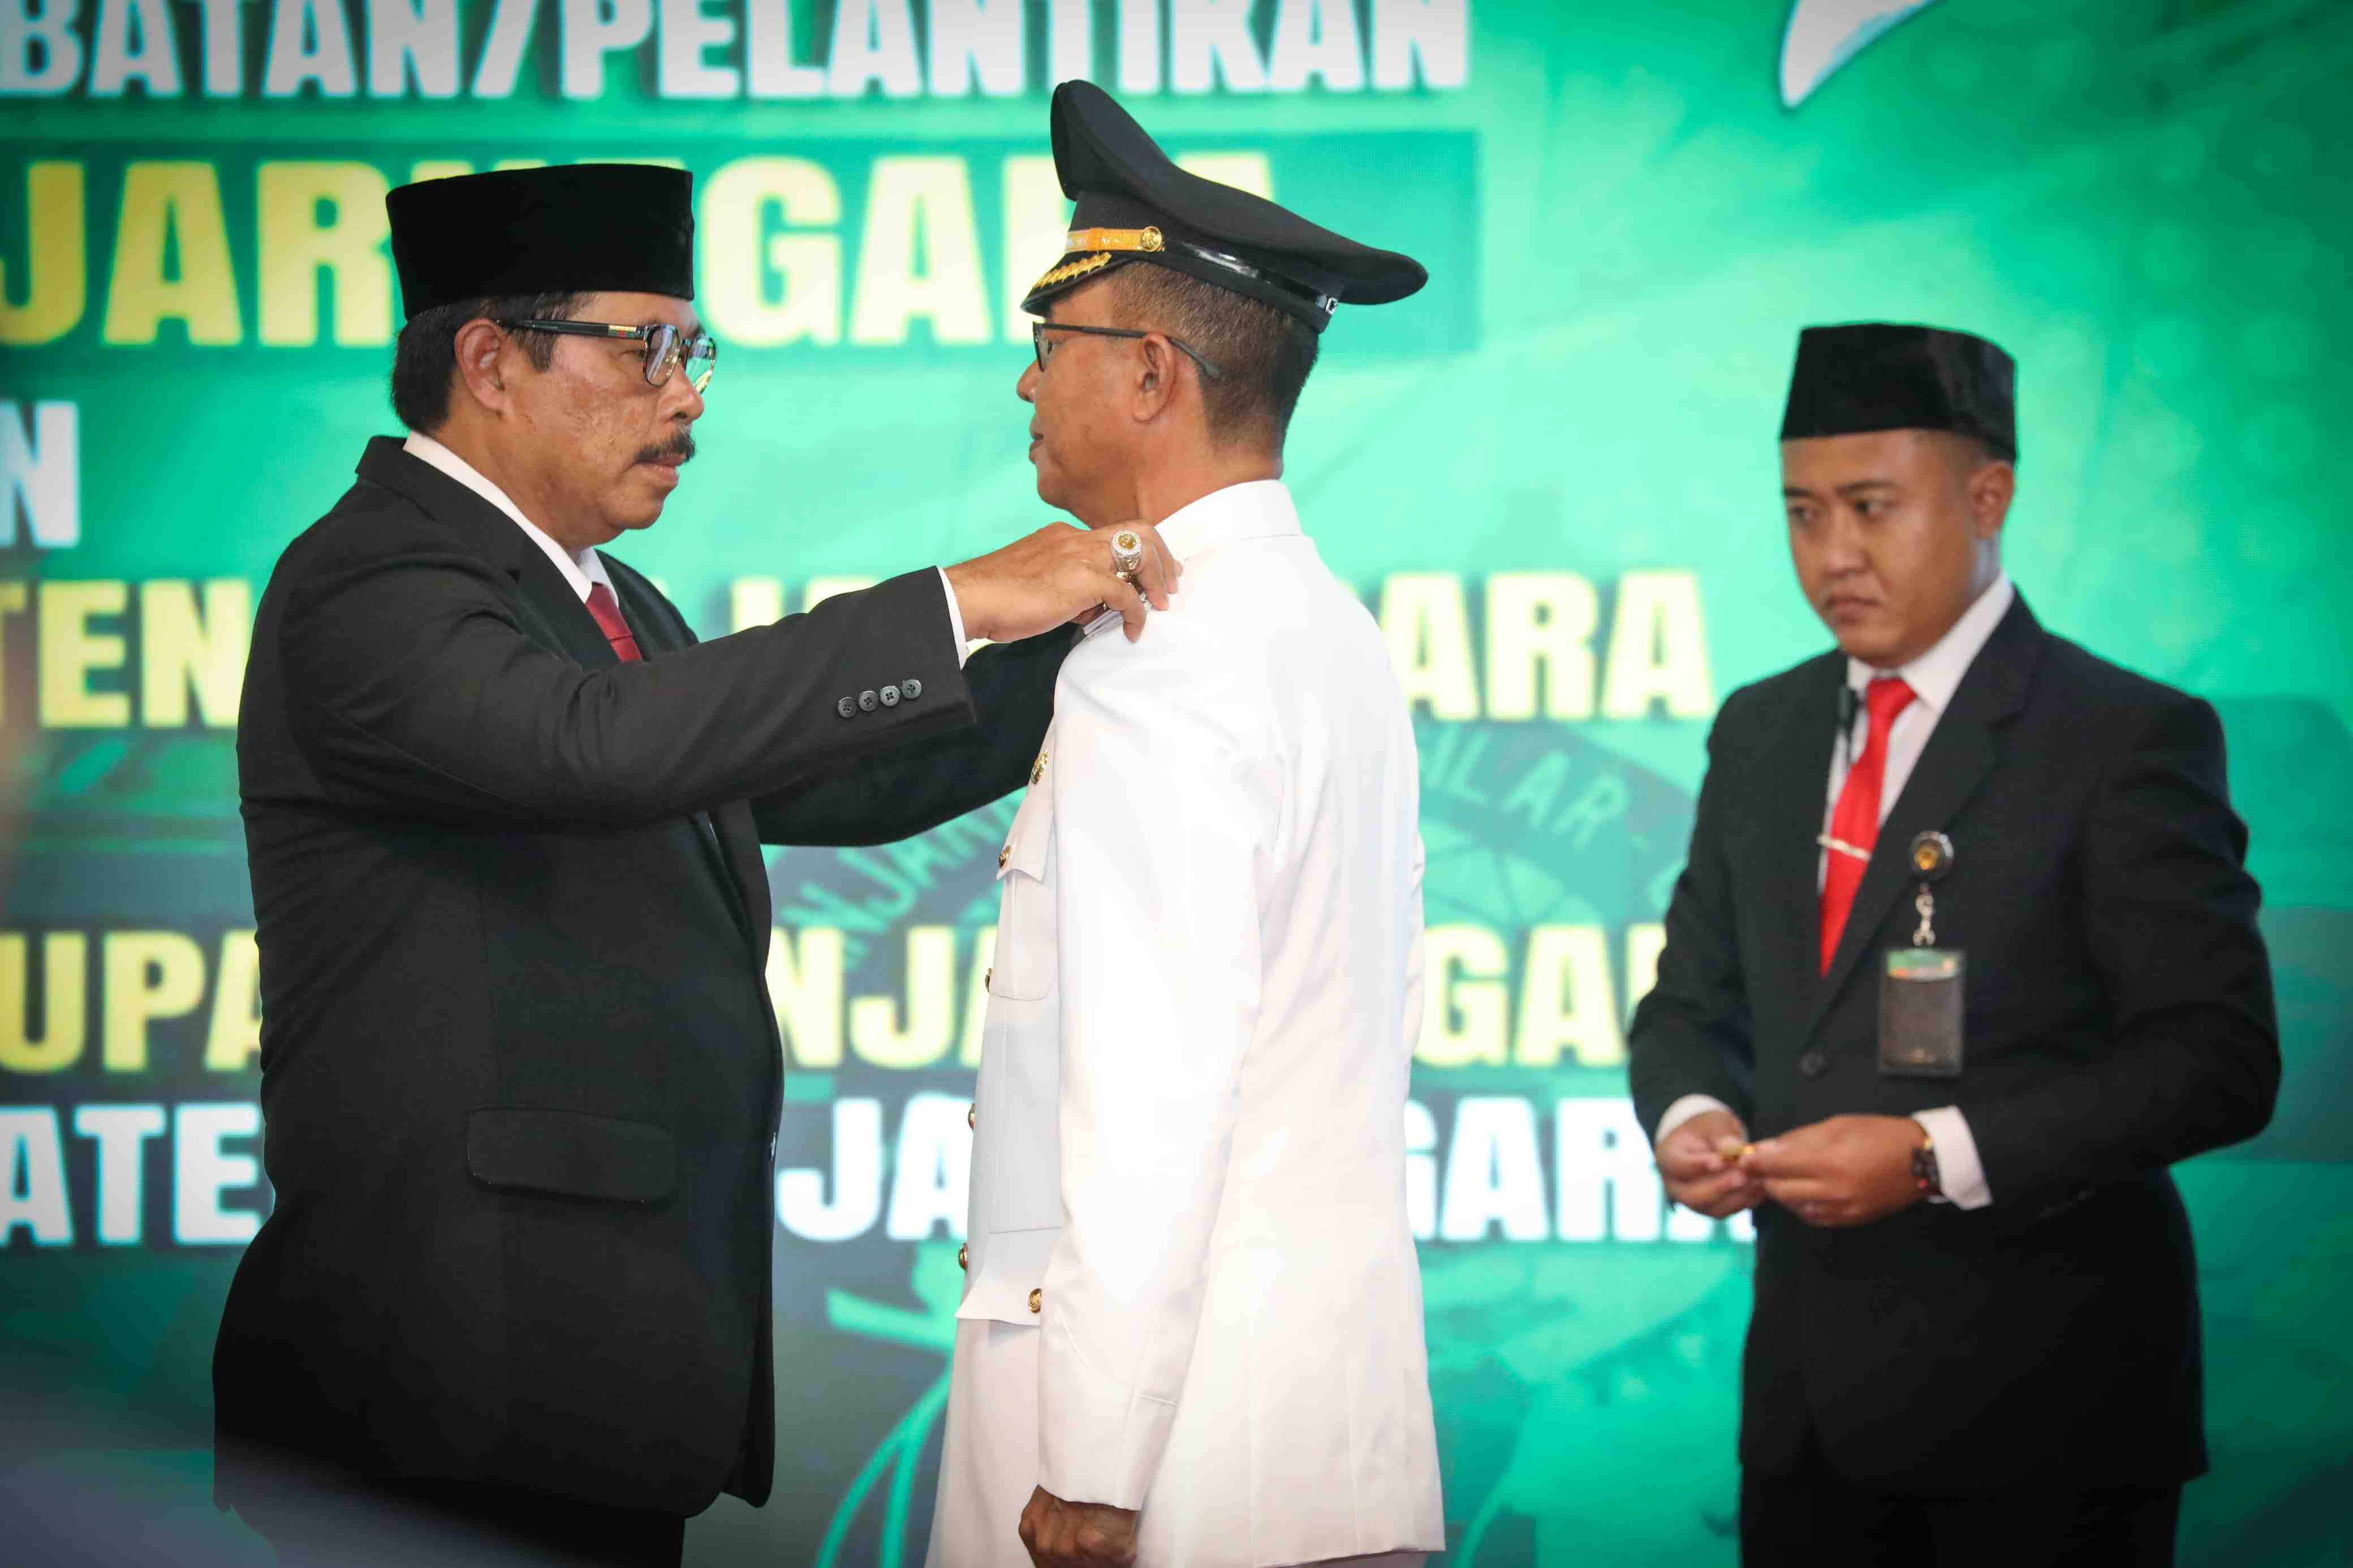 Pj Gubernur Jateng Lantik Muhammad Masrofi Jadi Pj Bupati Banjarnegara, Dituntut Lebih Inovatif  